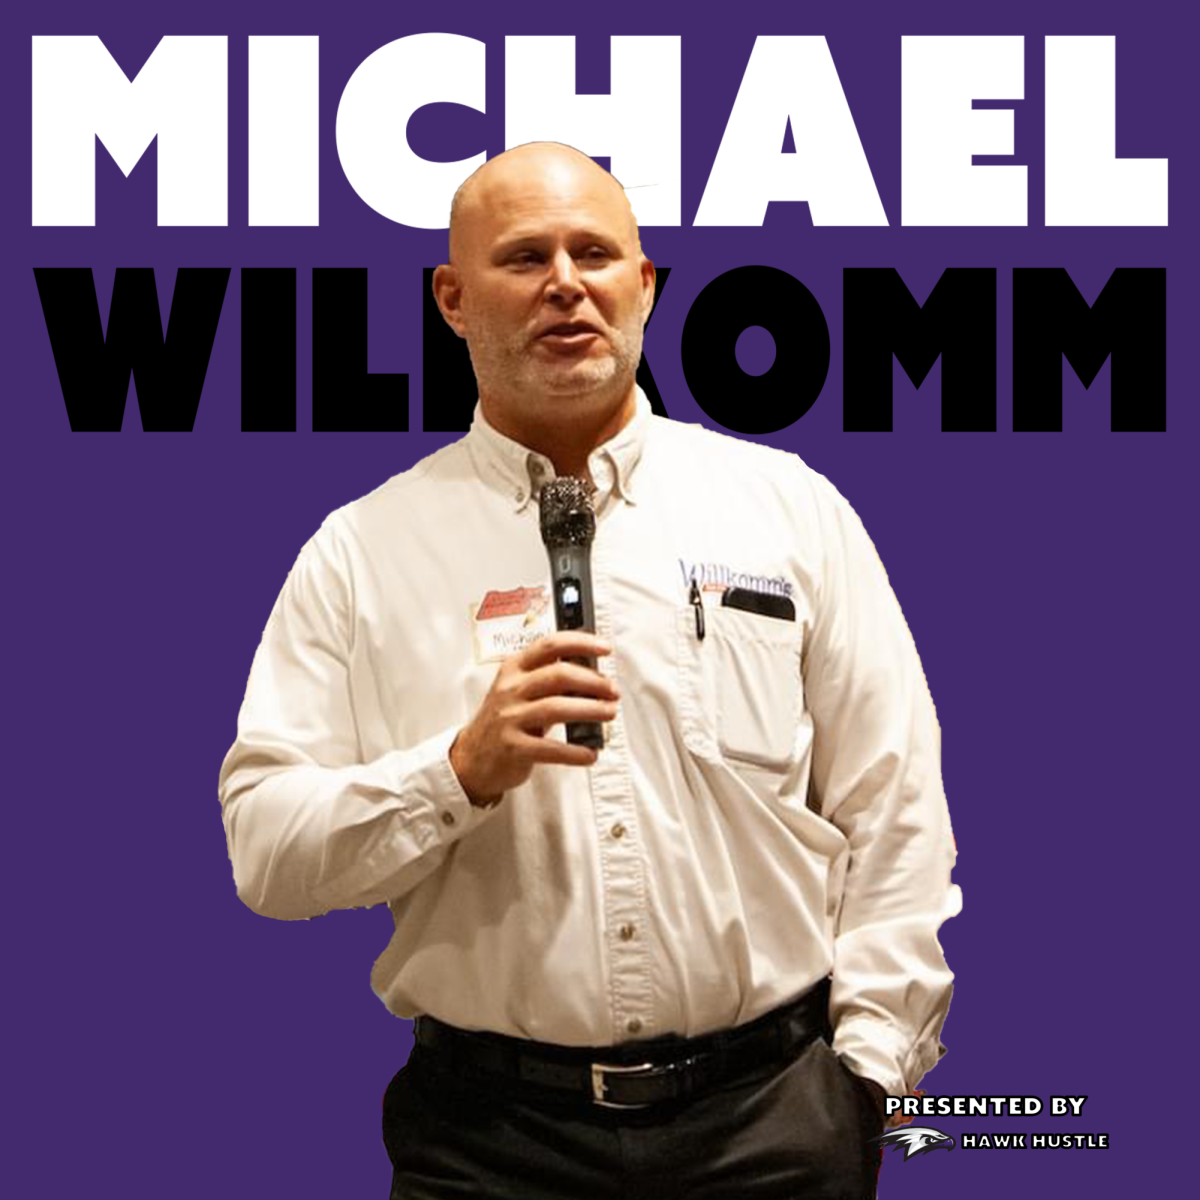 Man Behind Rocket Wash: Michael Willkomm